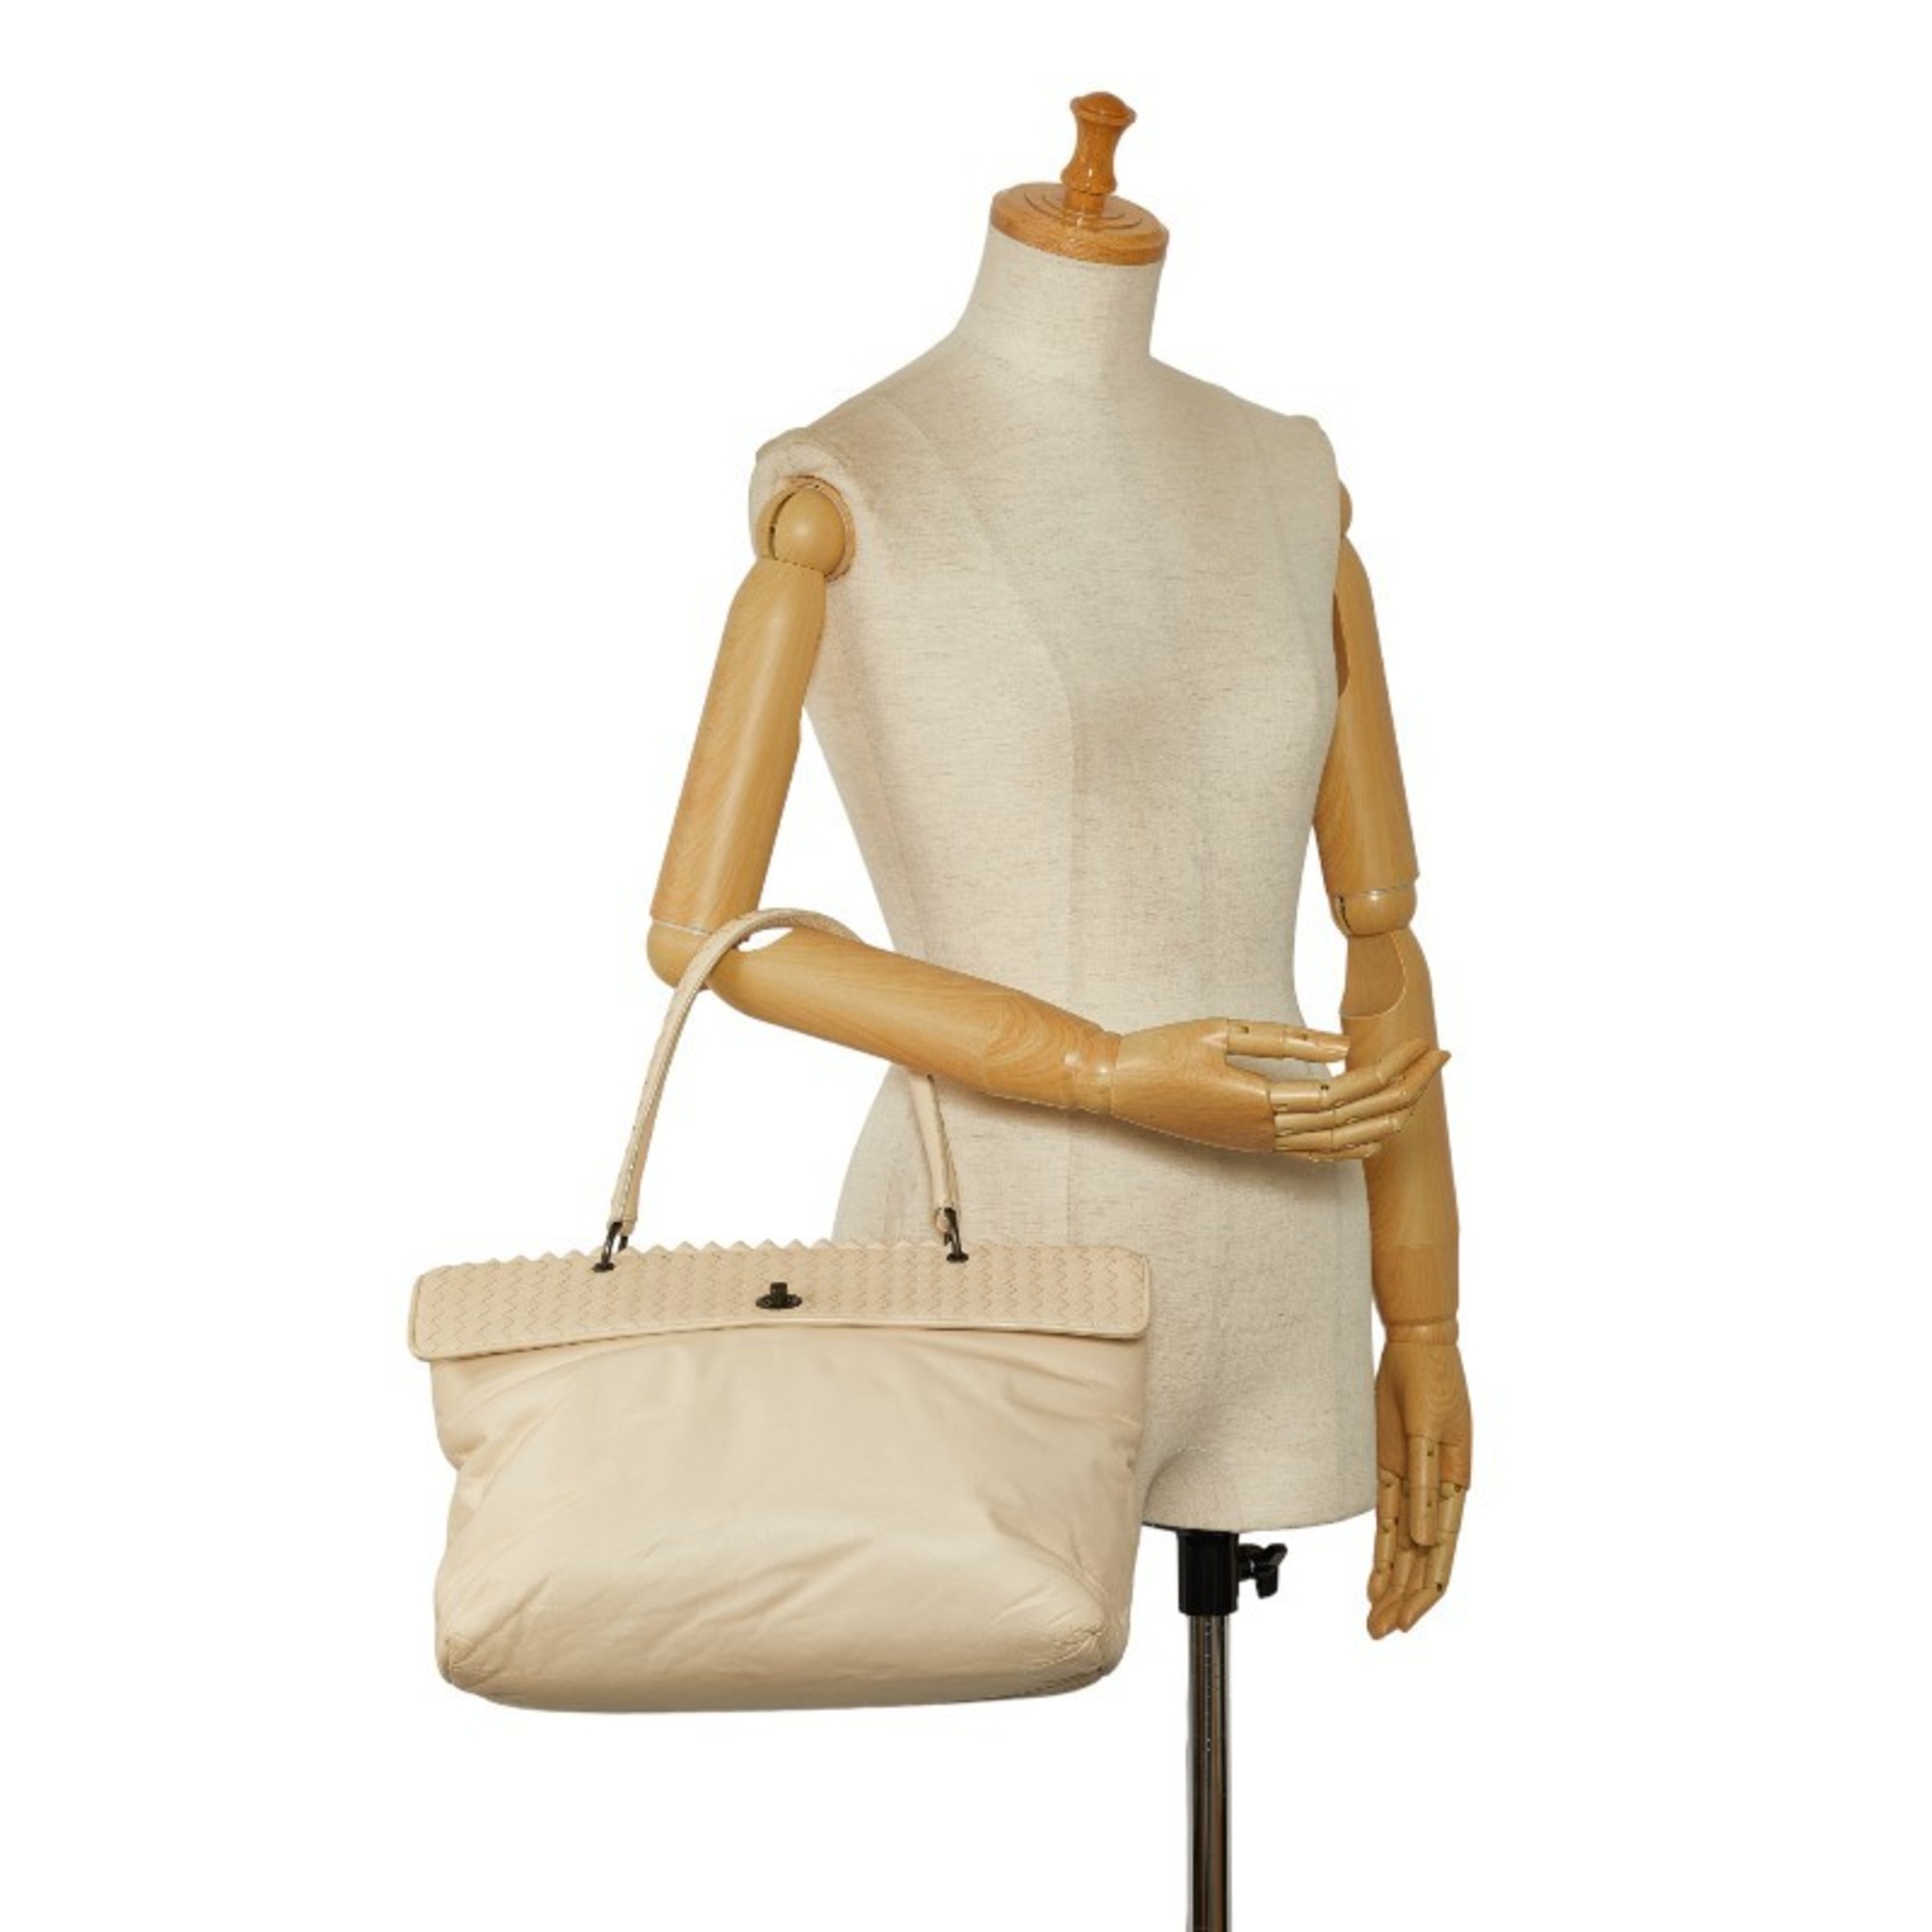 Bottega Veneta Intrecciato Handbag White Leather Women's BOTTEGAVENETA